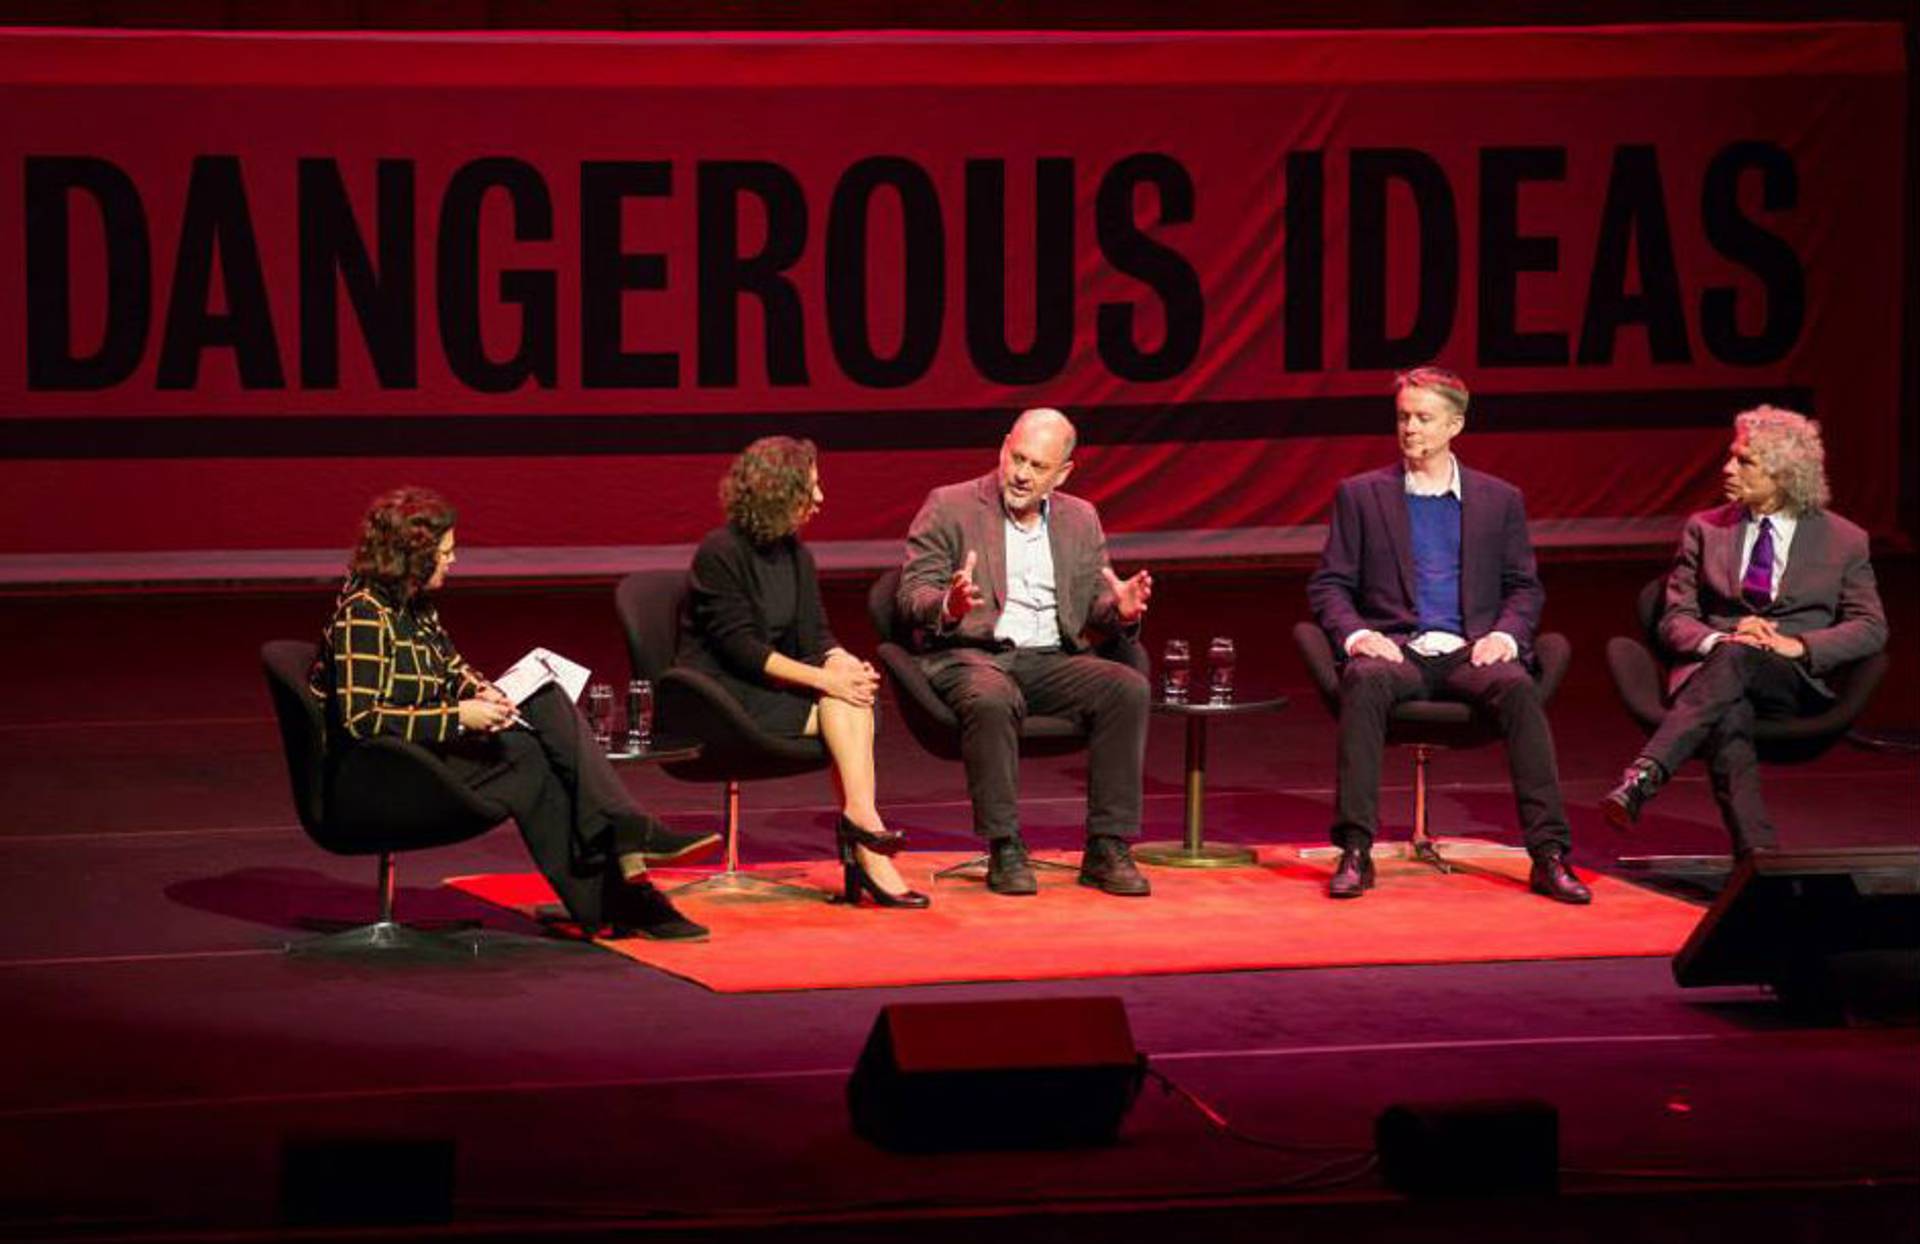 Creating a forum for 'dangerous' ideas